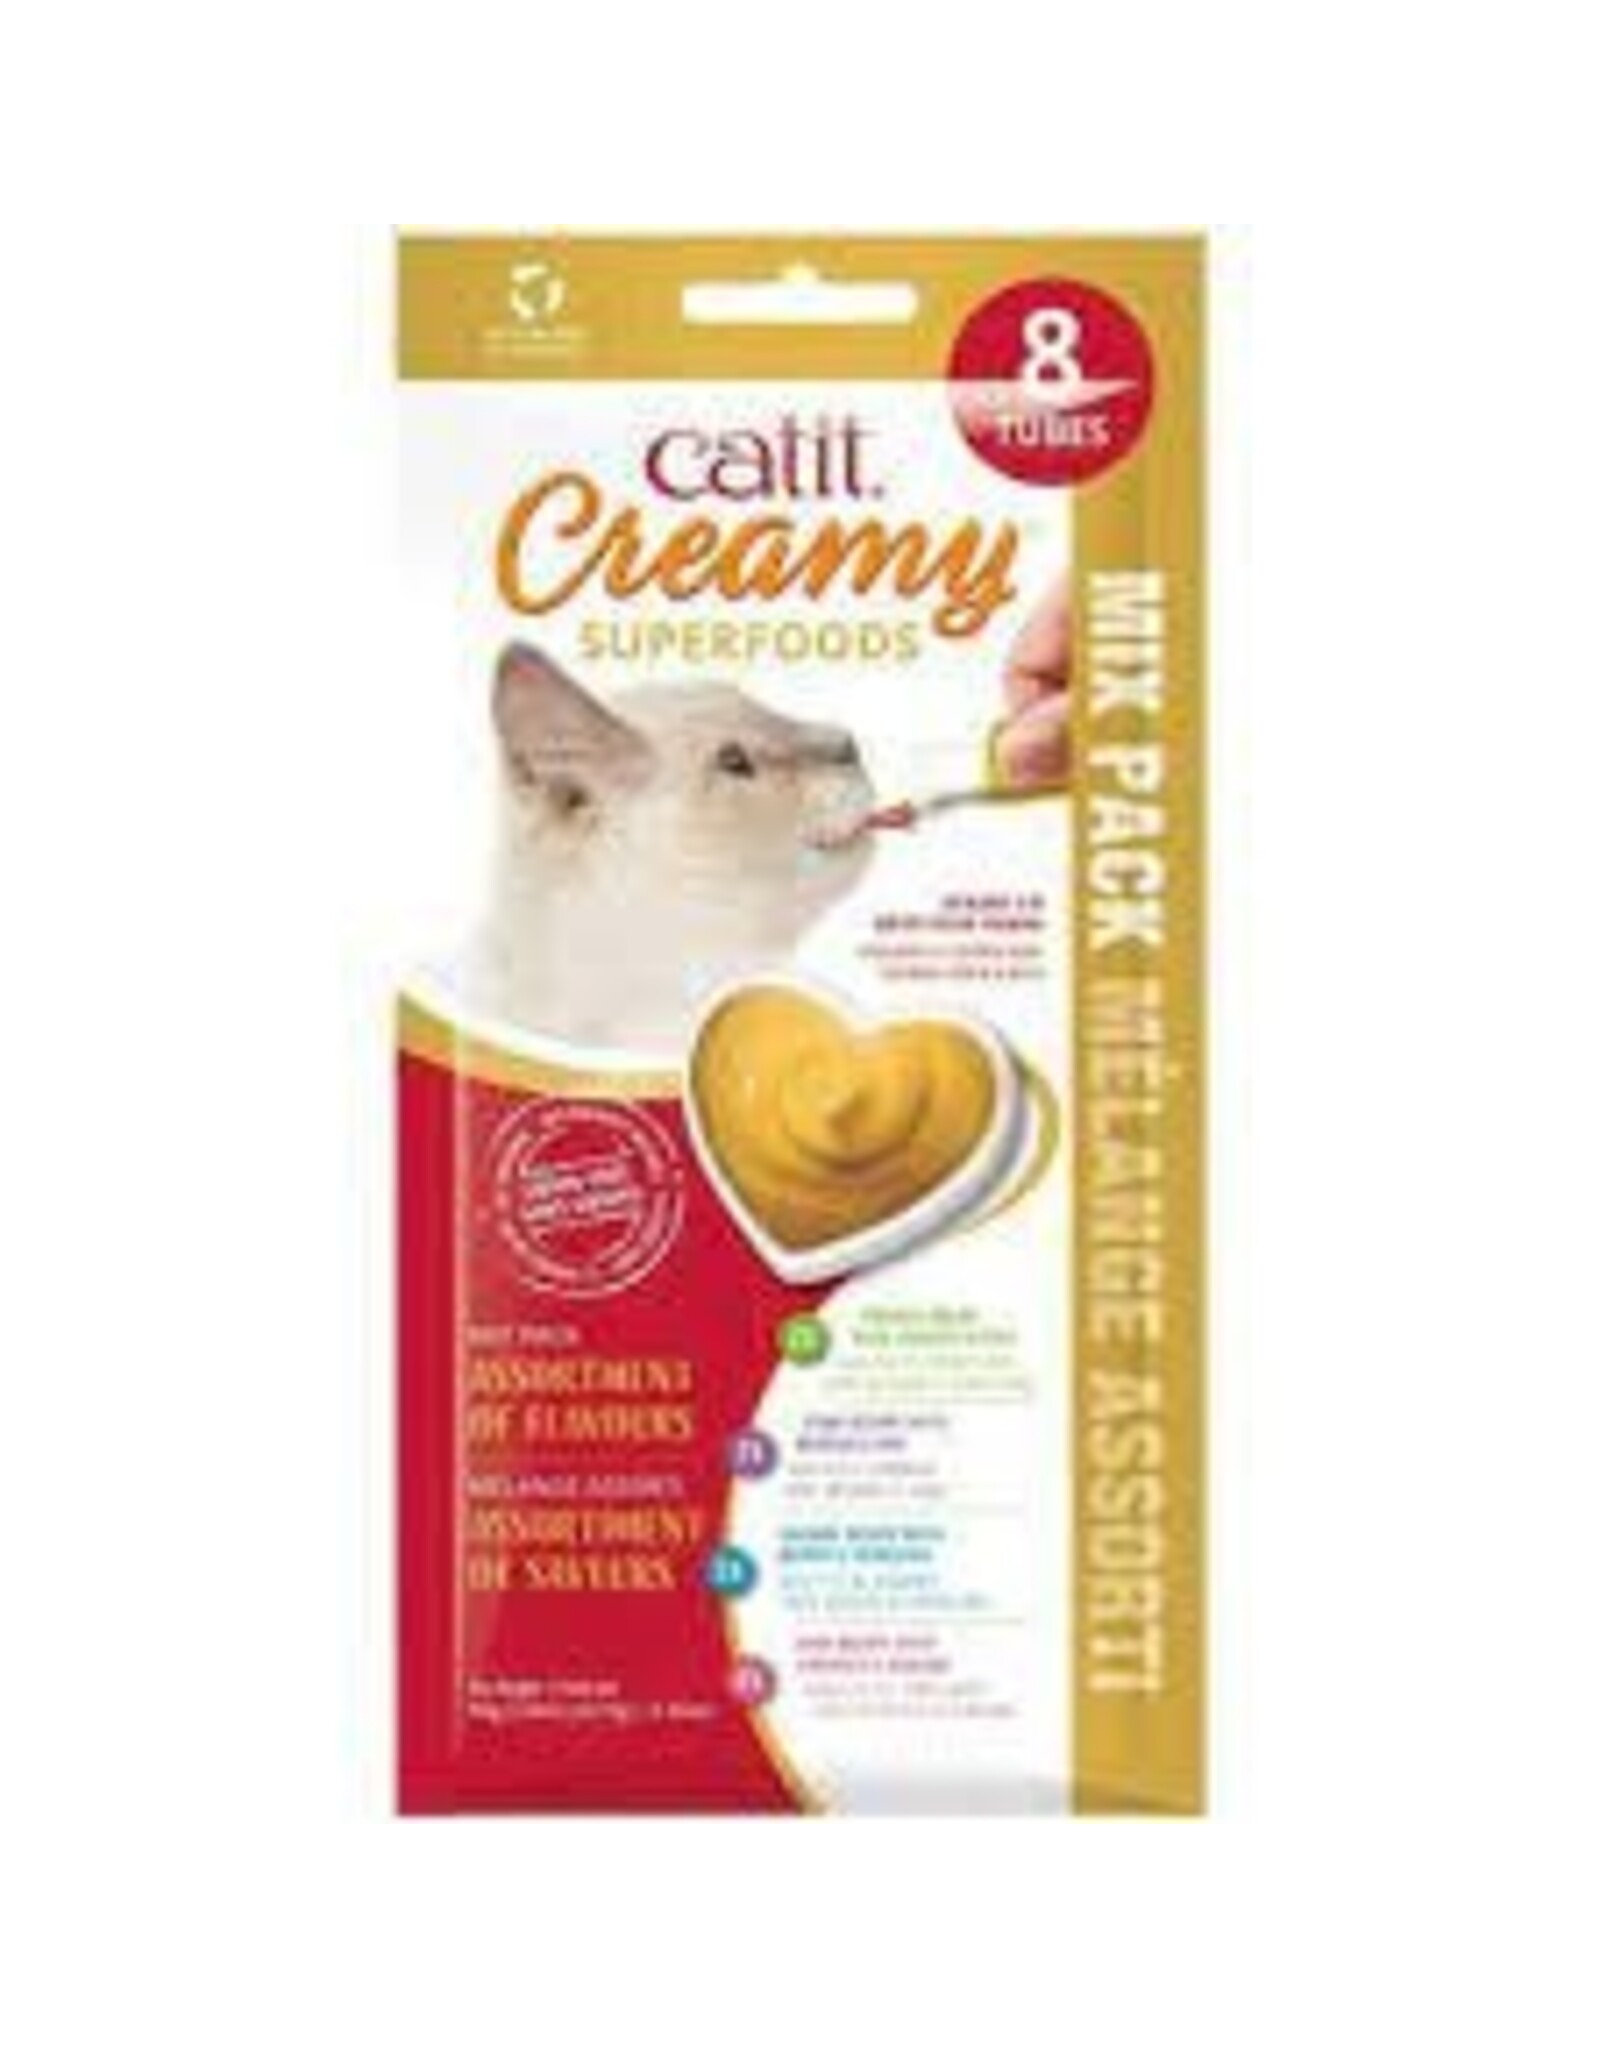 Catit Catit Creamy Superfood Treats, Assorted Multipack, 8pk